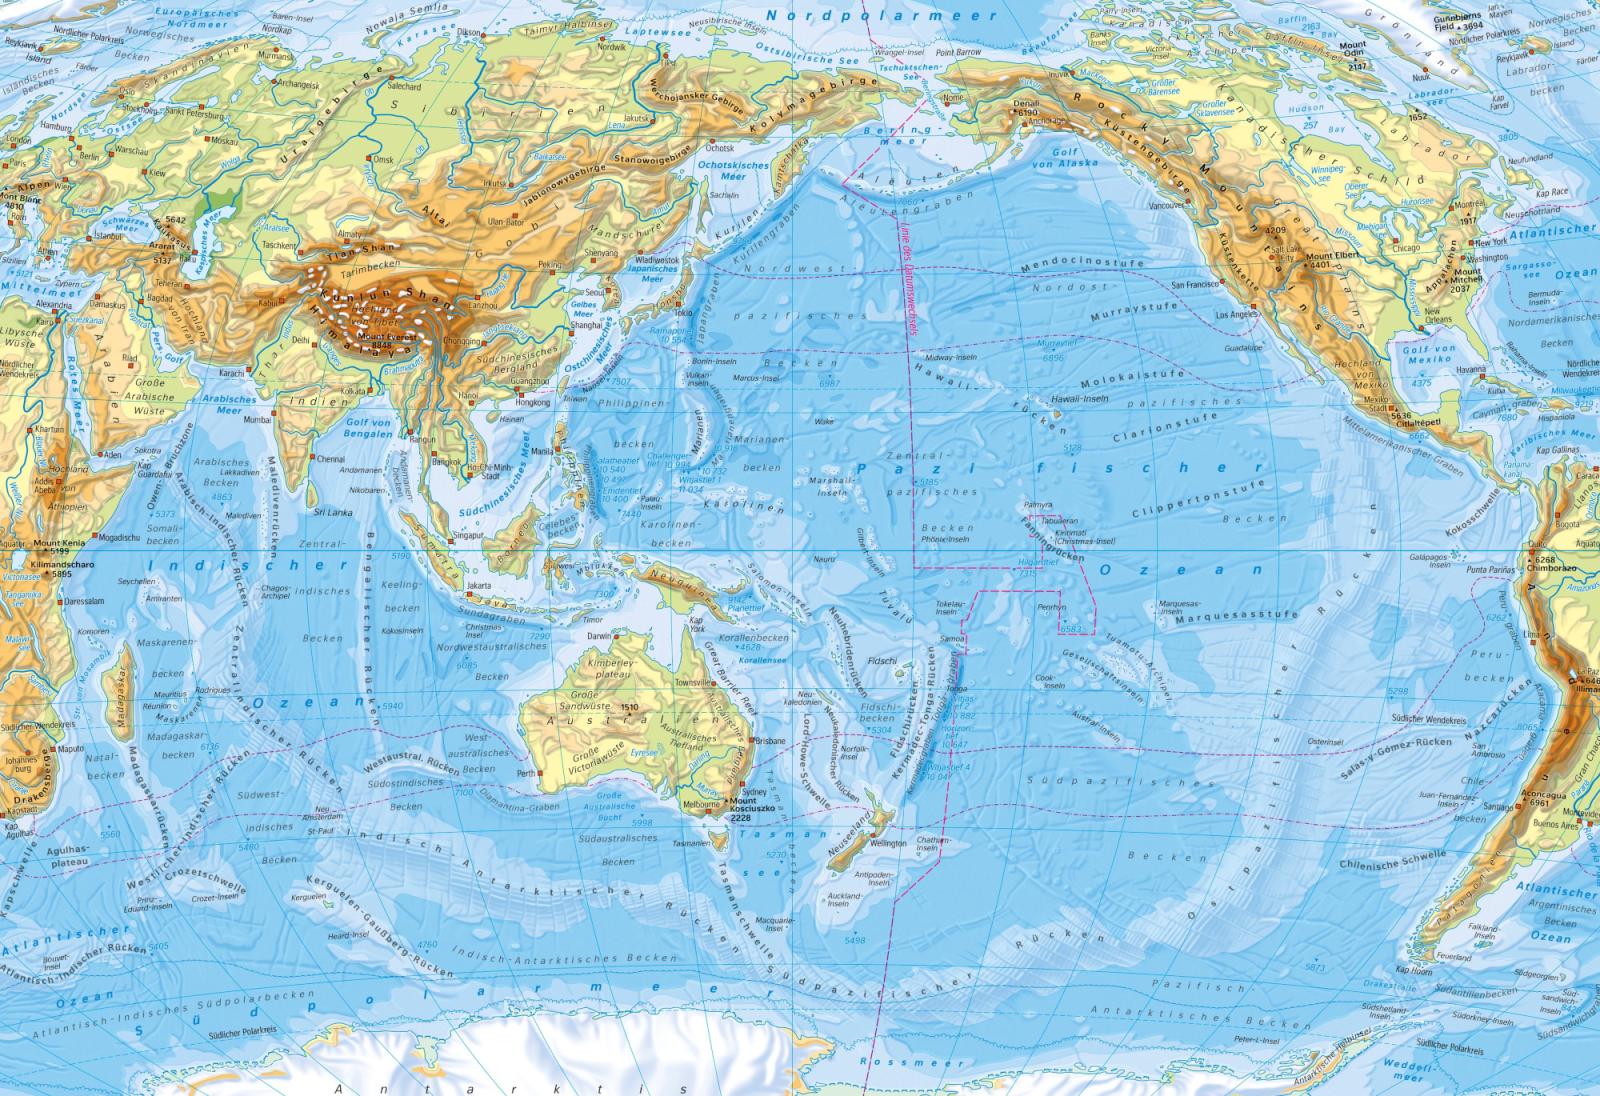 На тихом океане находится город. Тихий океан на карте. Острова Тихого океана на карте. Т̊и̊х̊и̊й̊ о̊к̊е̊а̊н̊ н̊а̊ к̊а̊р̊р̊ т̊т̊е̊. Карта Тихого океана географическая.